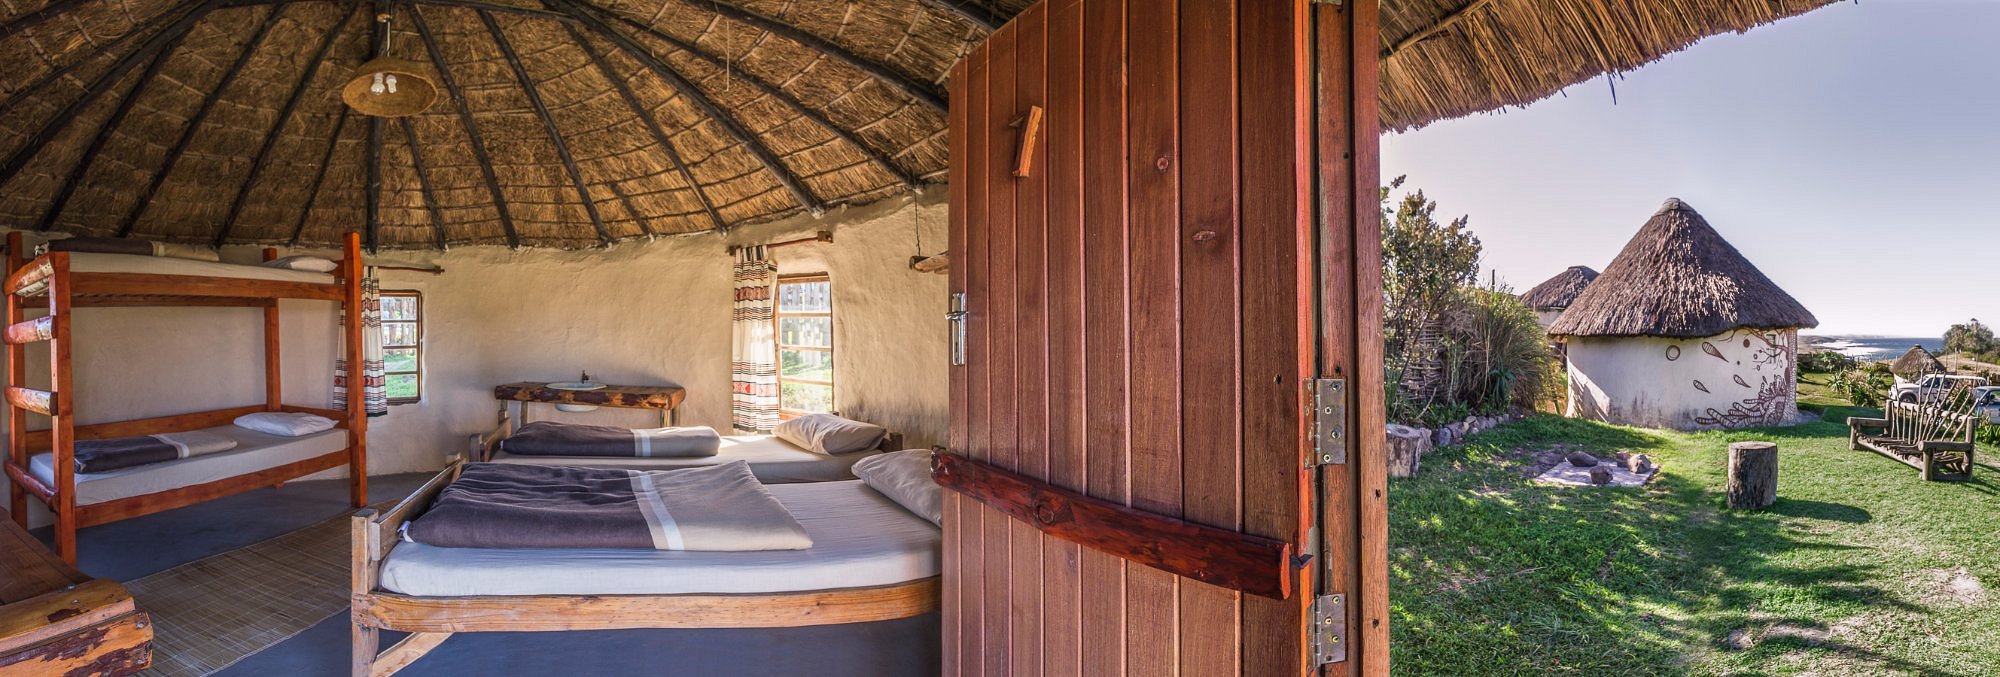 Mdumbi Backpackers Hostel - Rooms